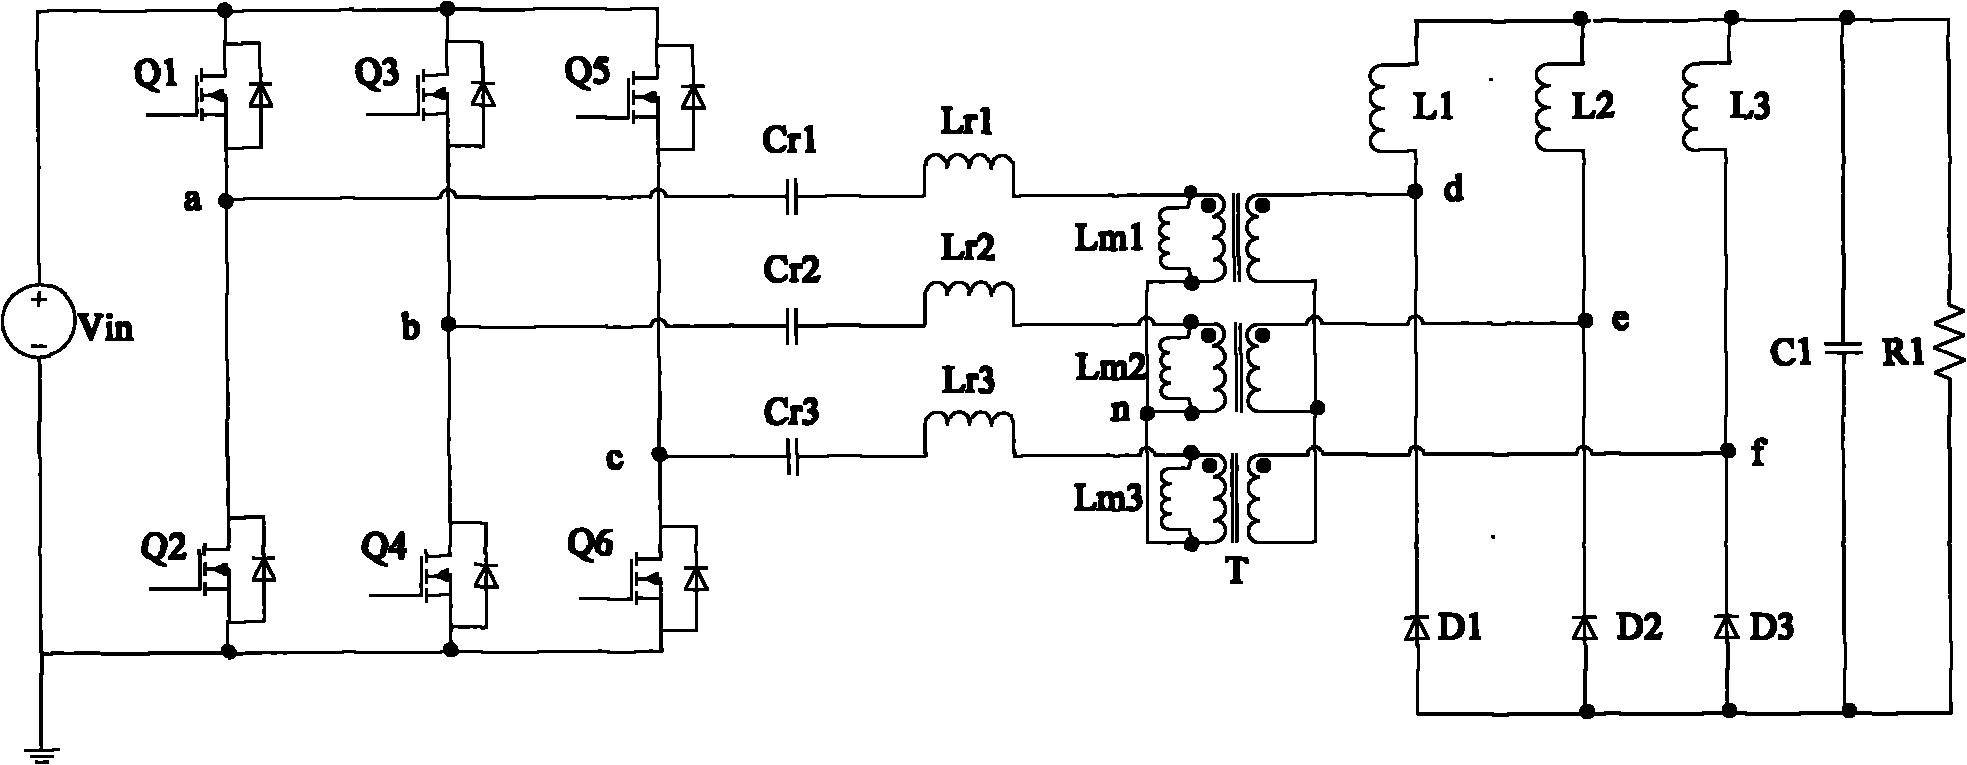 Low output loss LLC resonant converter